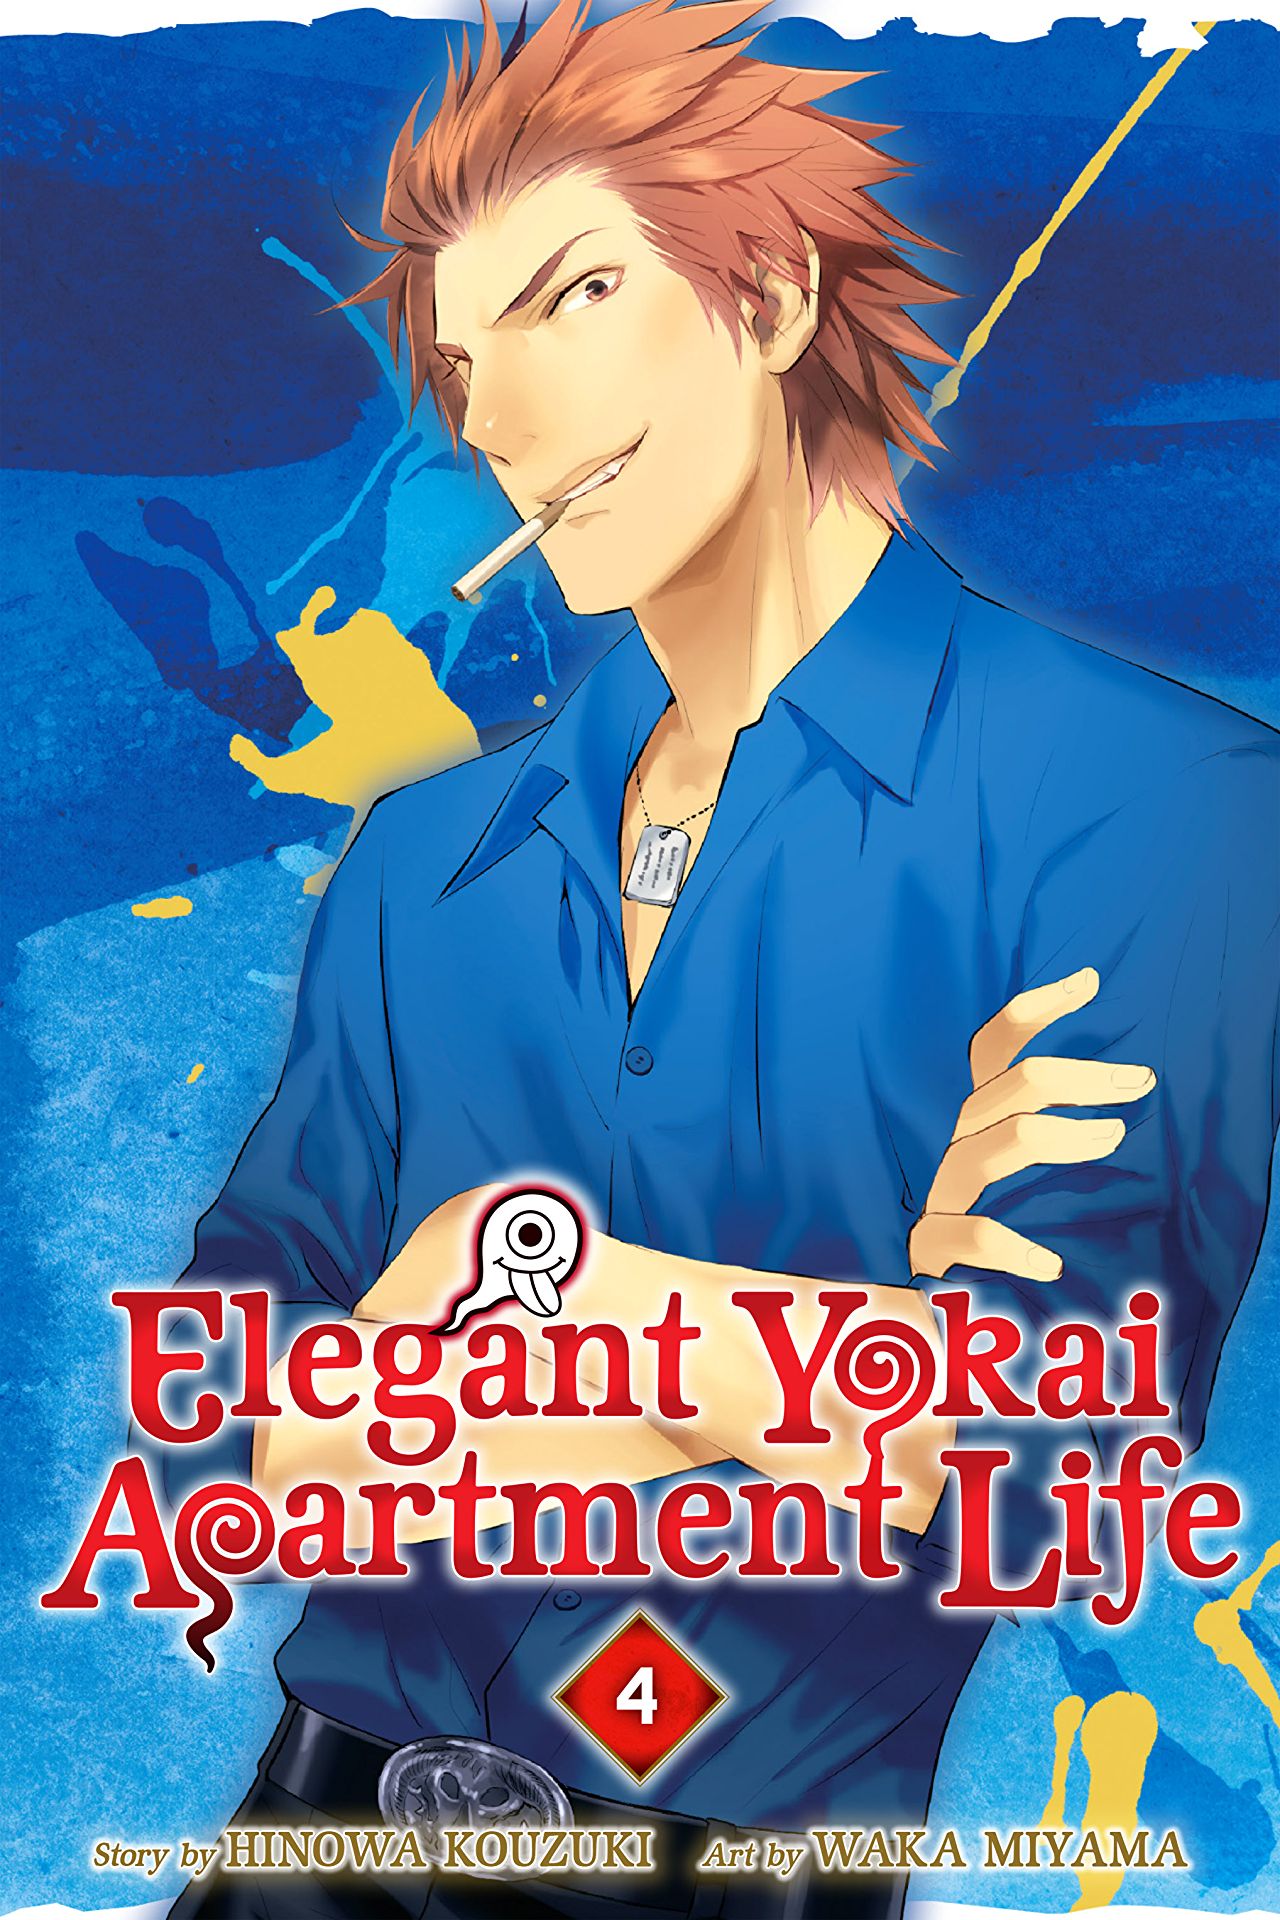 Elegant Yokai Apartment Life Vol. 4 Review